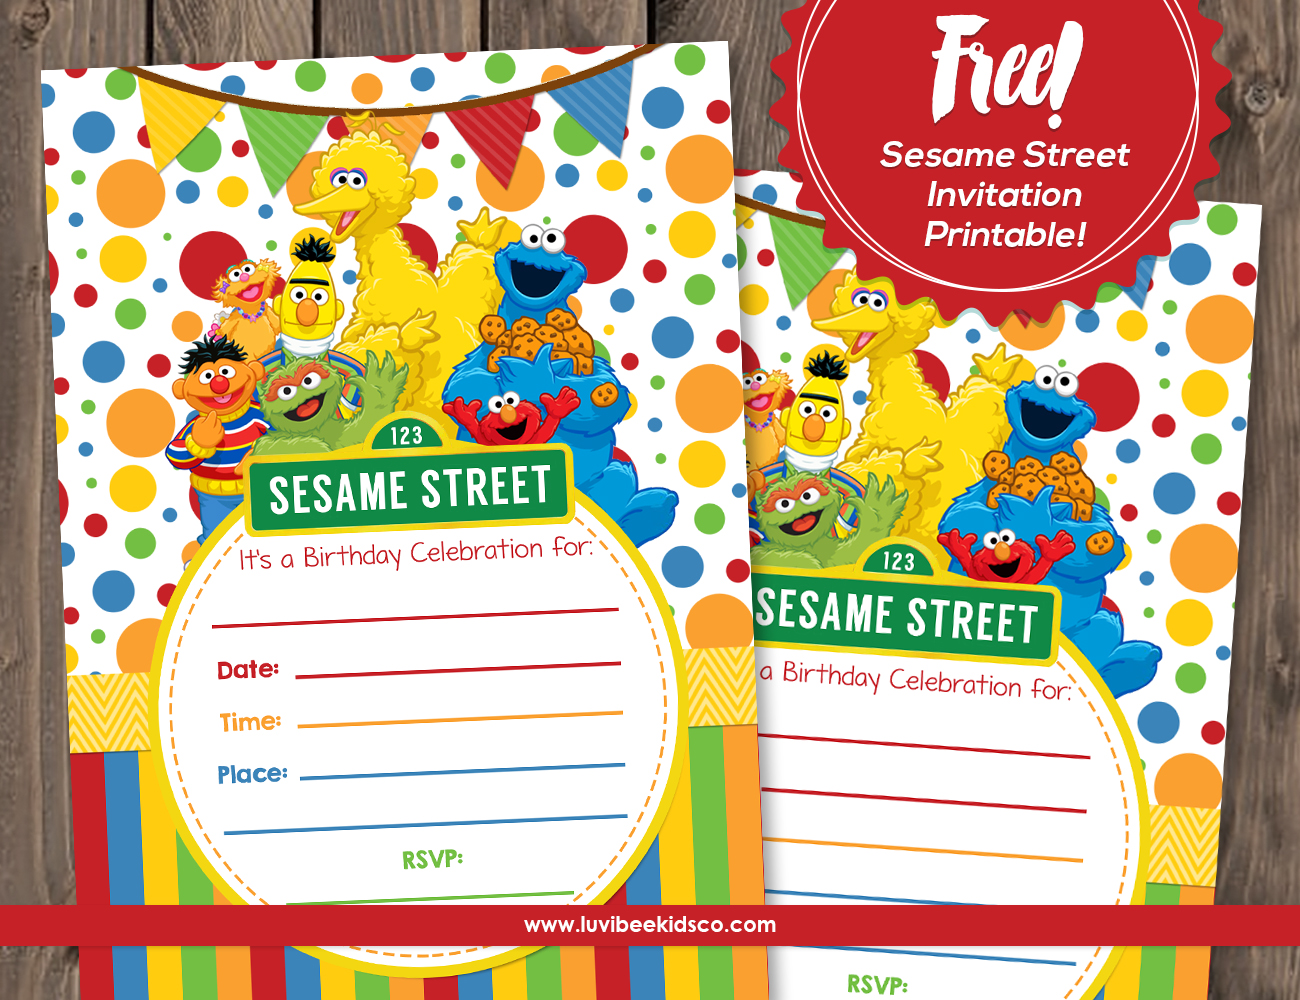 Sesame Street Invitation Tremplate Printable Free